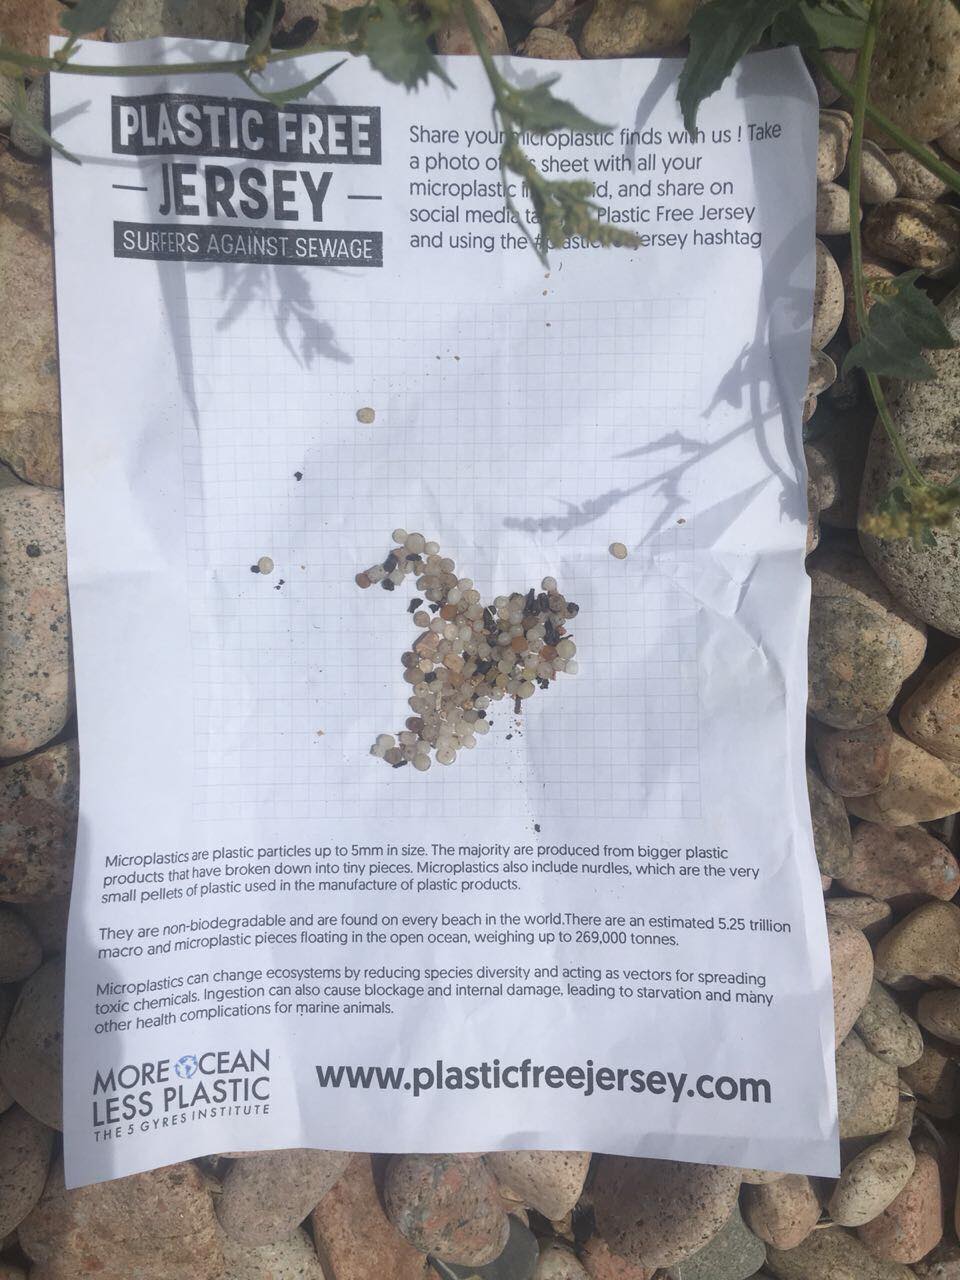 Nurdle hunting Plastic Free Jersey